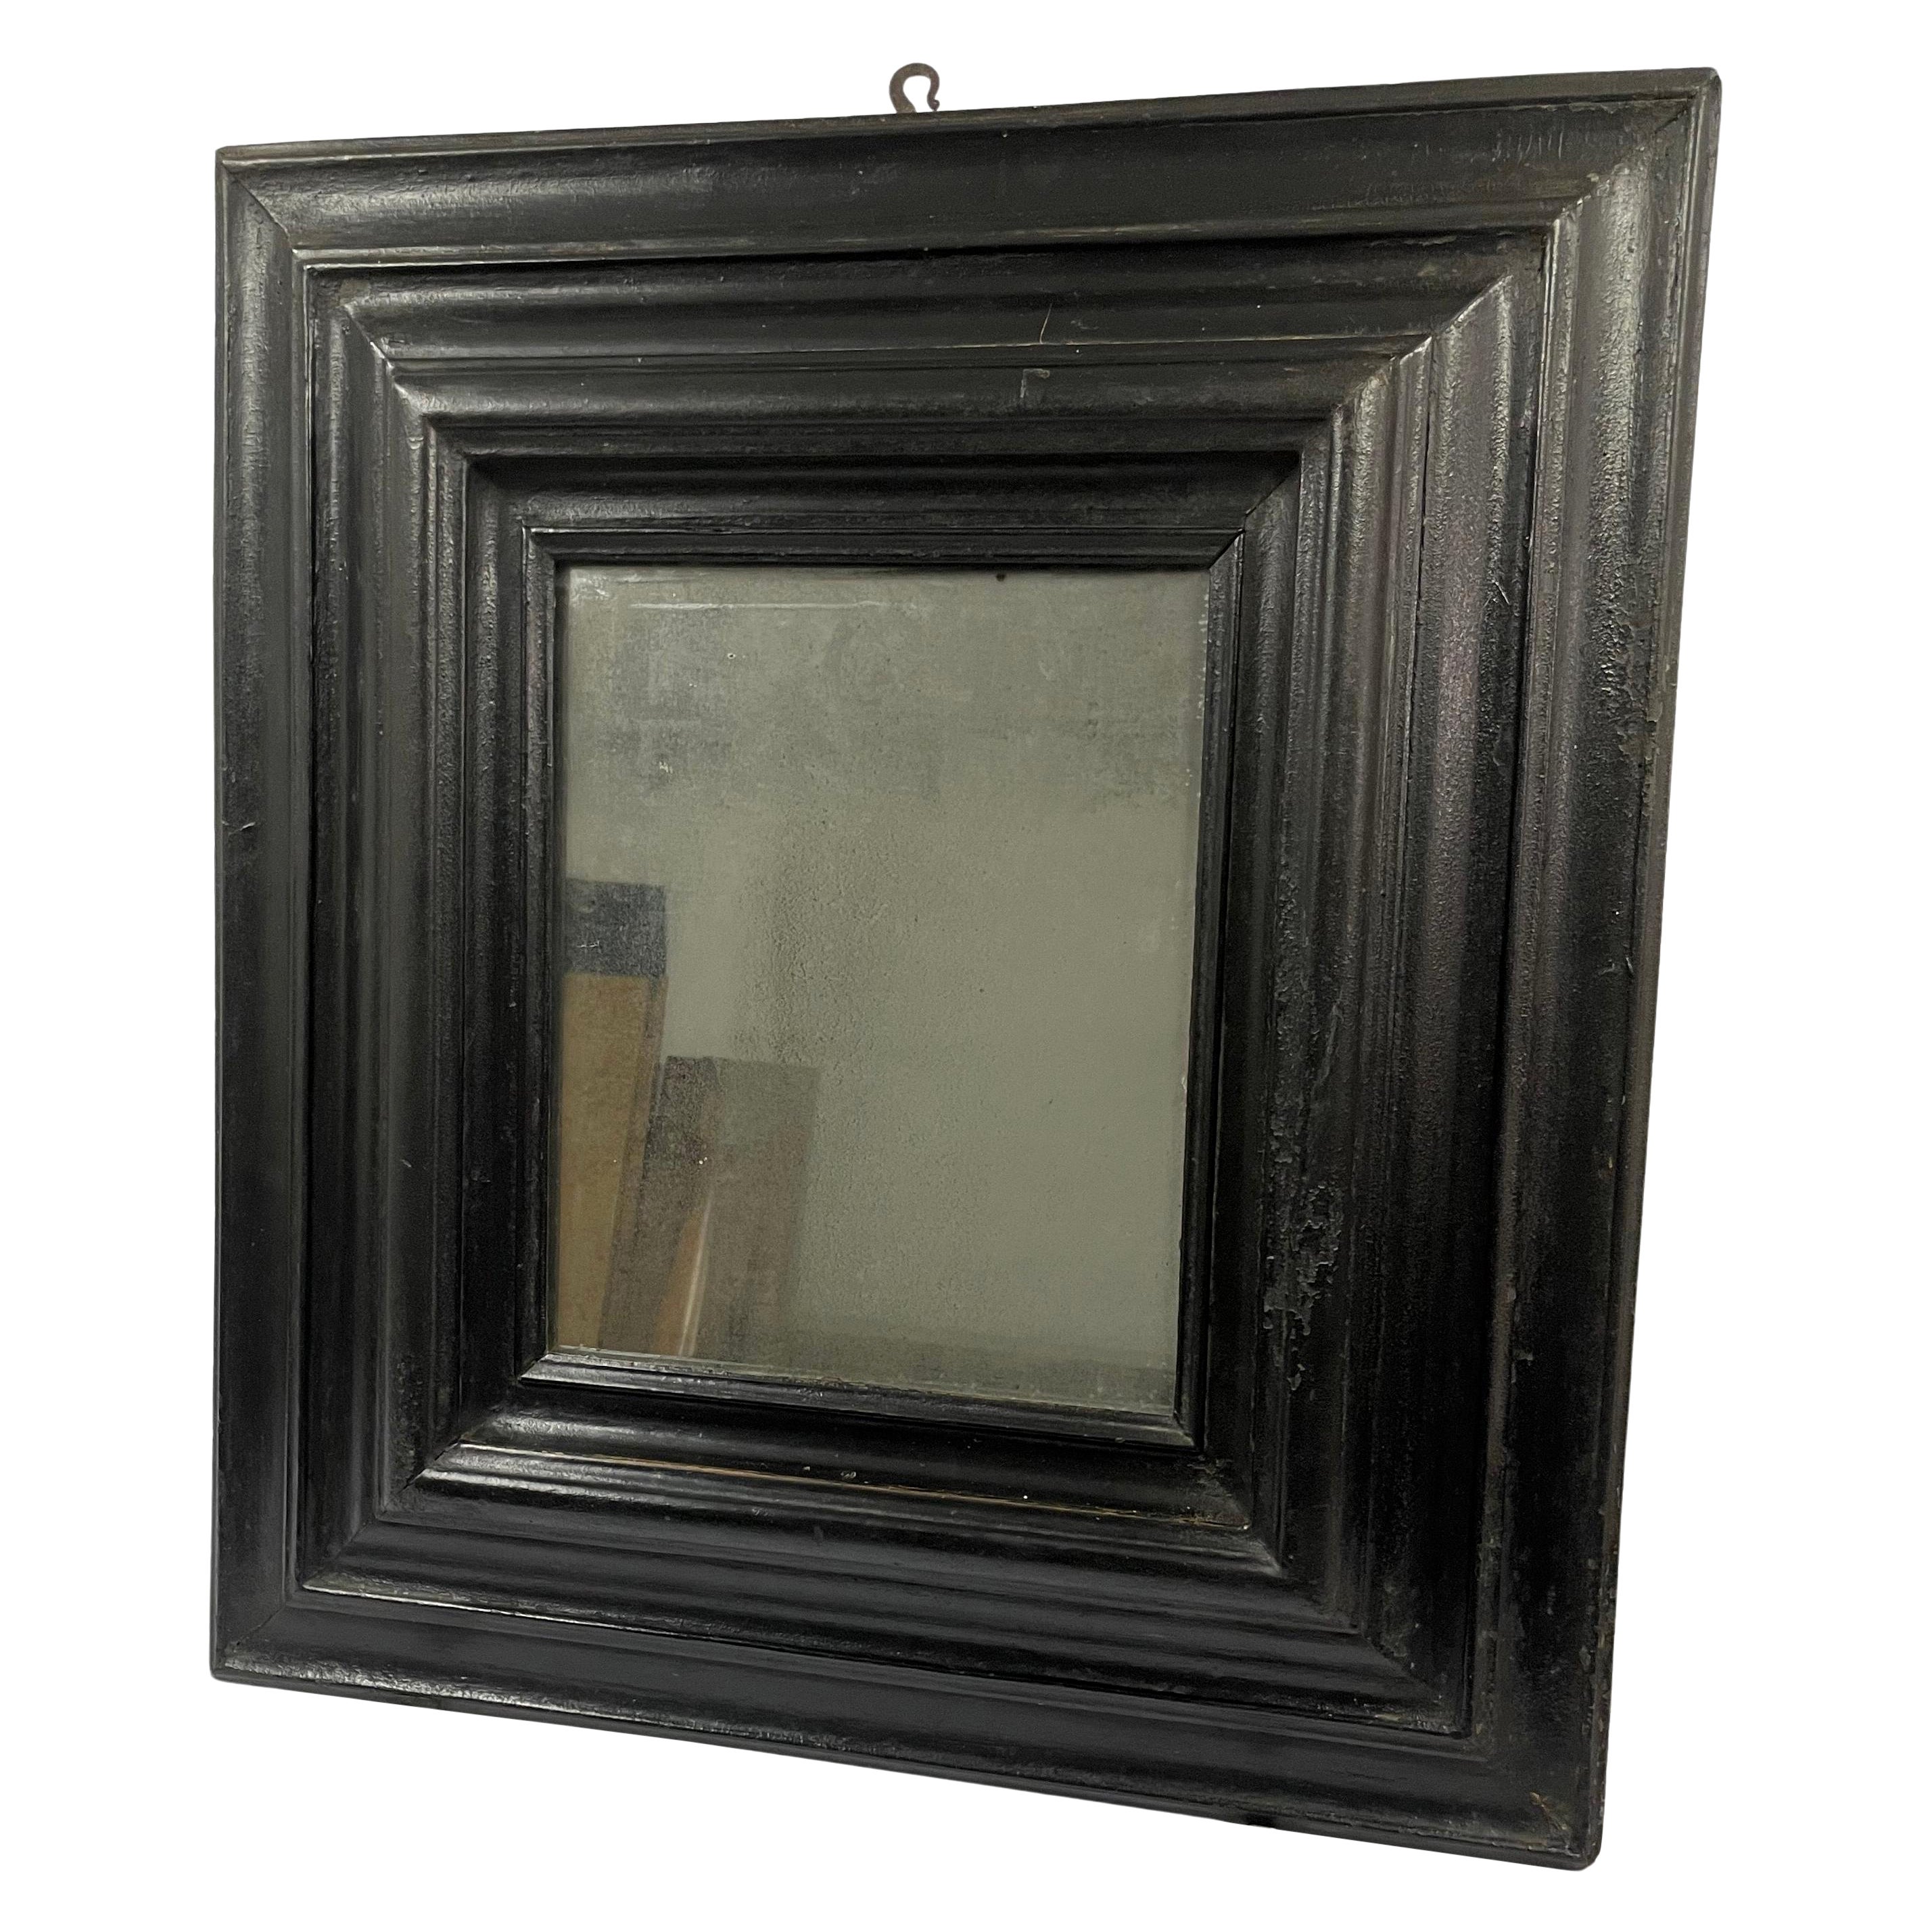 Italian Mirror in Ebonized Wood from the Early Eighteenth Century